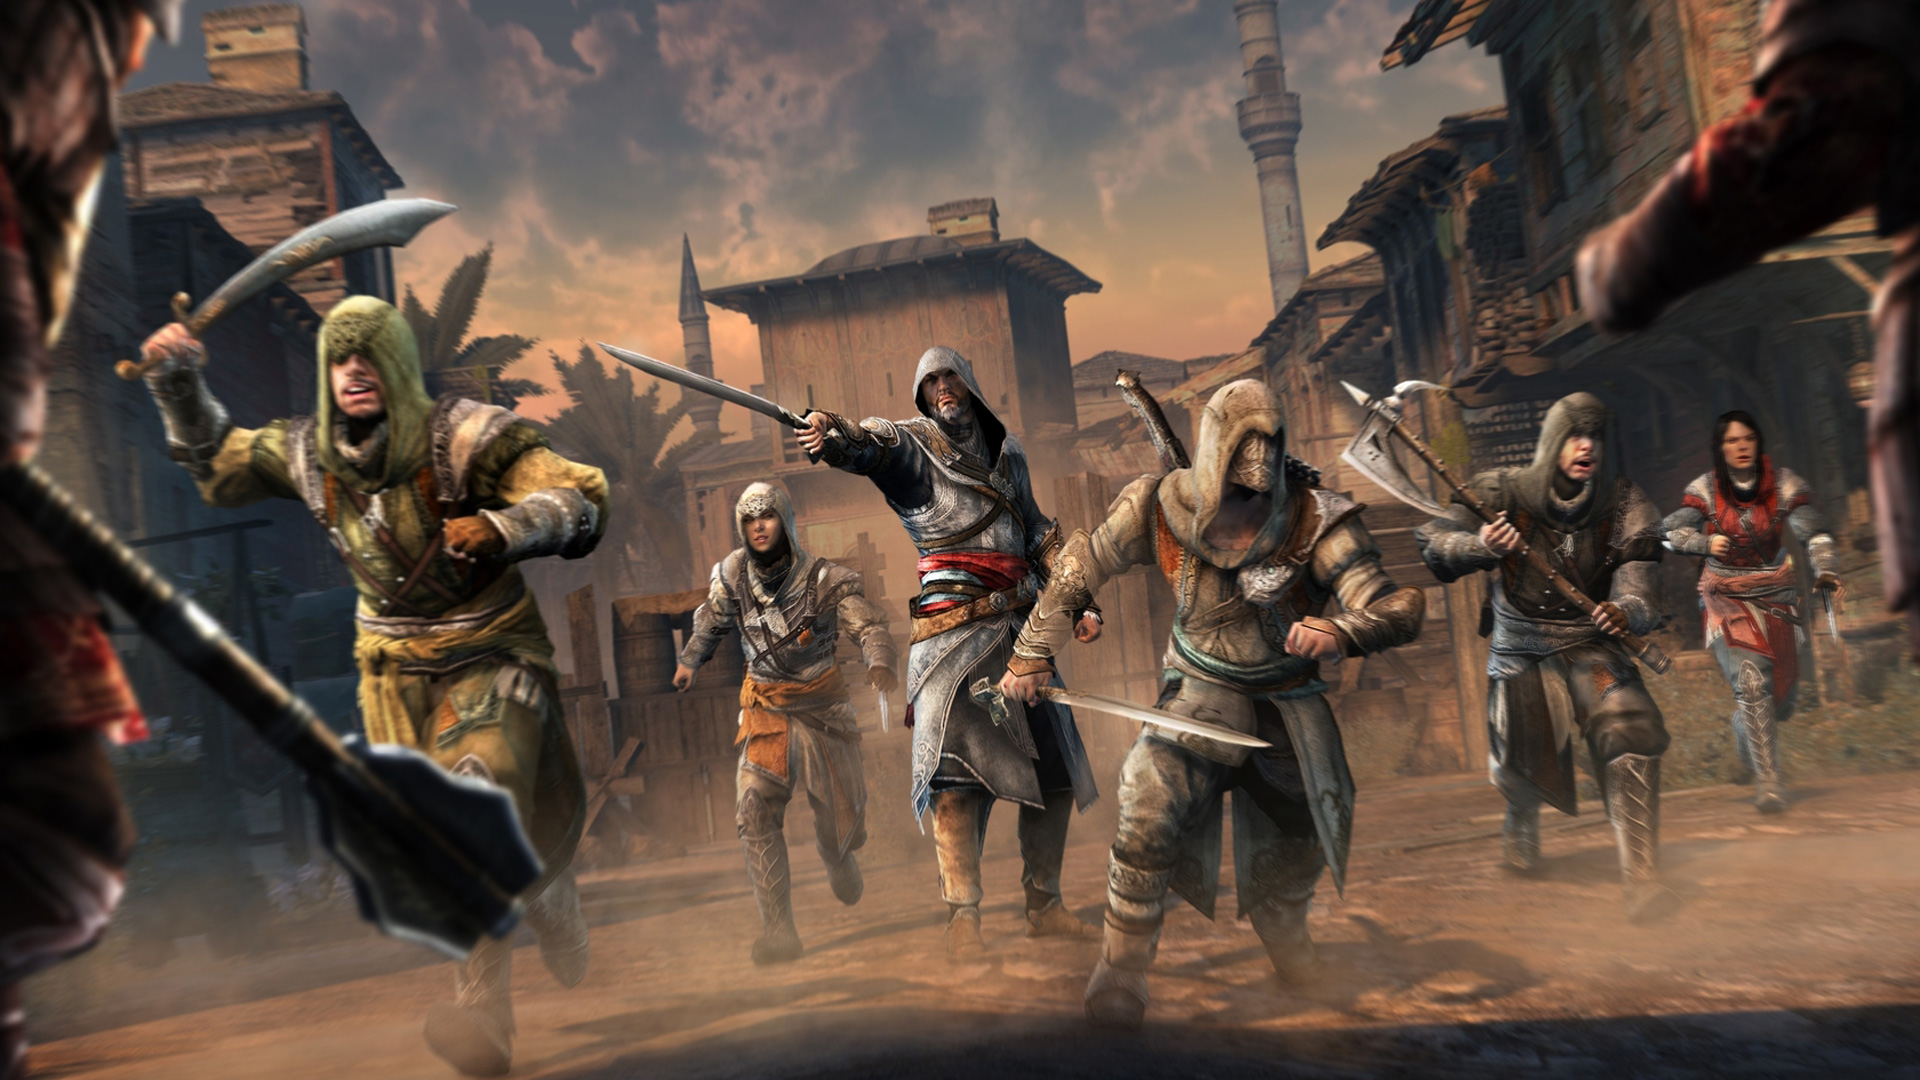 Assassins Creed Revelations Wallpaper HD Desktop